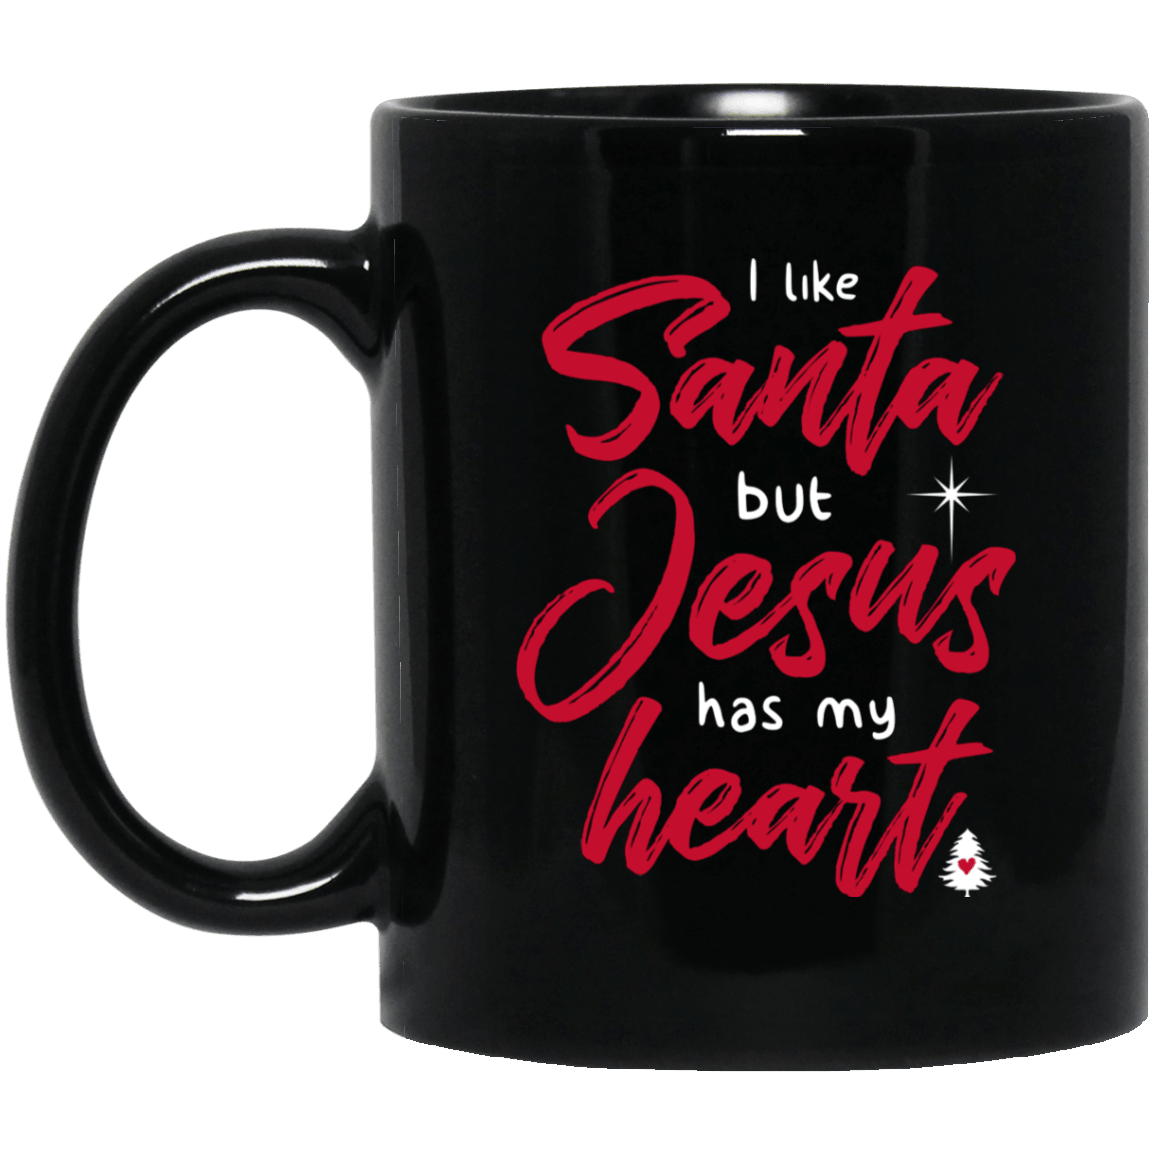 Designs by MyUtopia Shout Out:I Like Santa but Jesus Has My Heart - Ceramic Coffee Mug - Black,11 oz / Black,Apparel